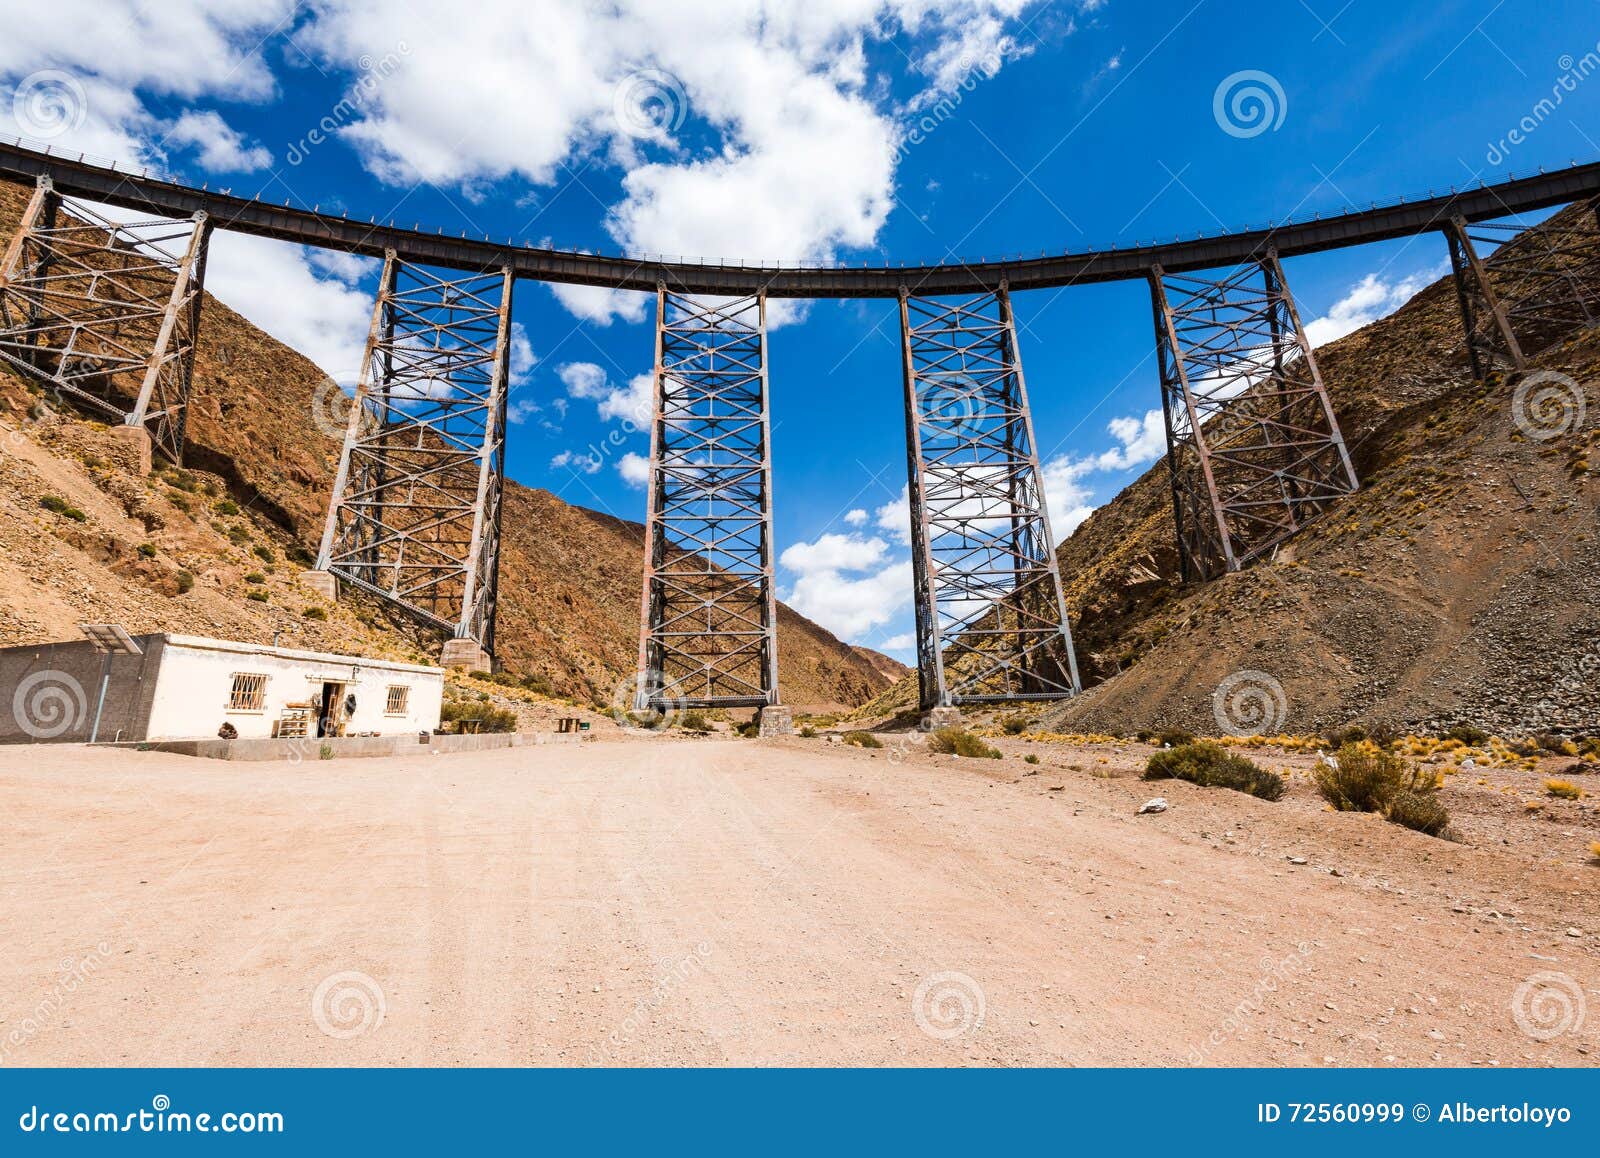 la polvorilla viaduct, salta (argentina)